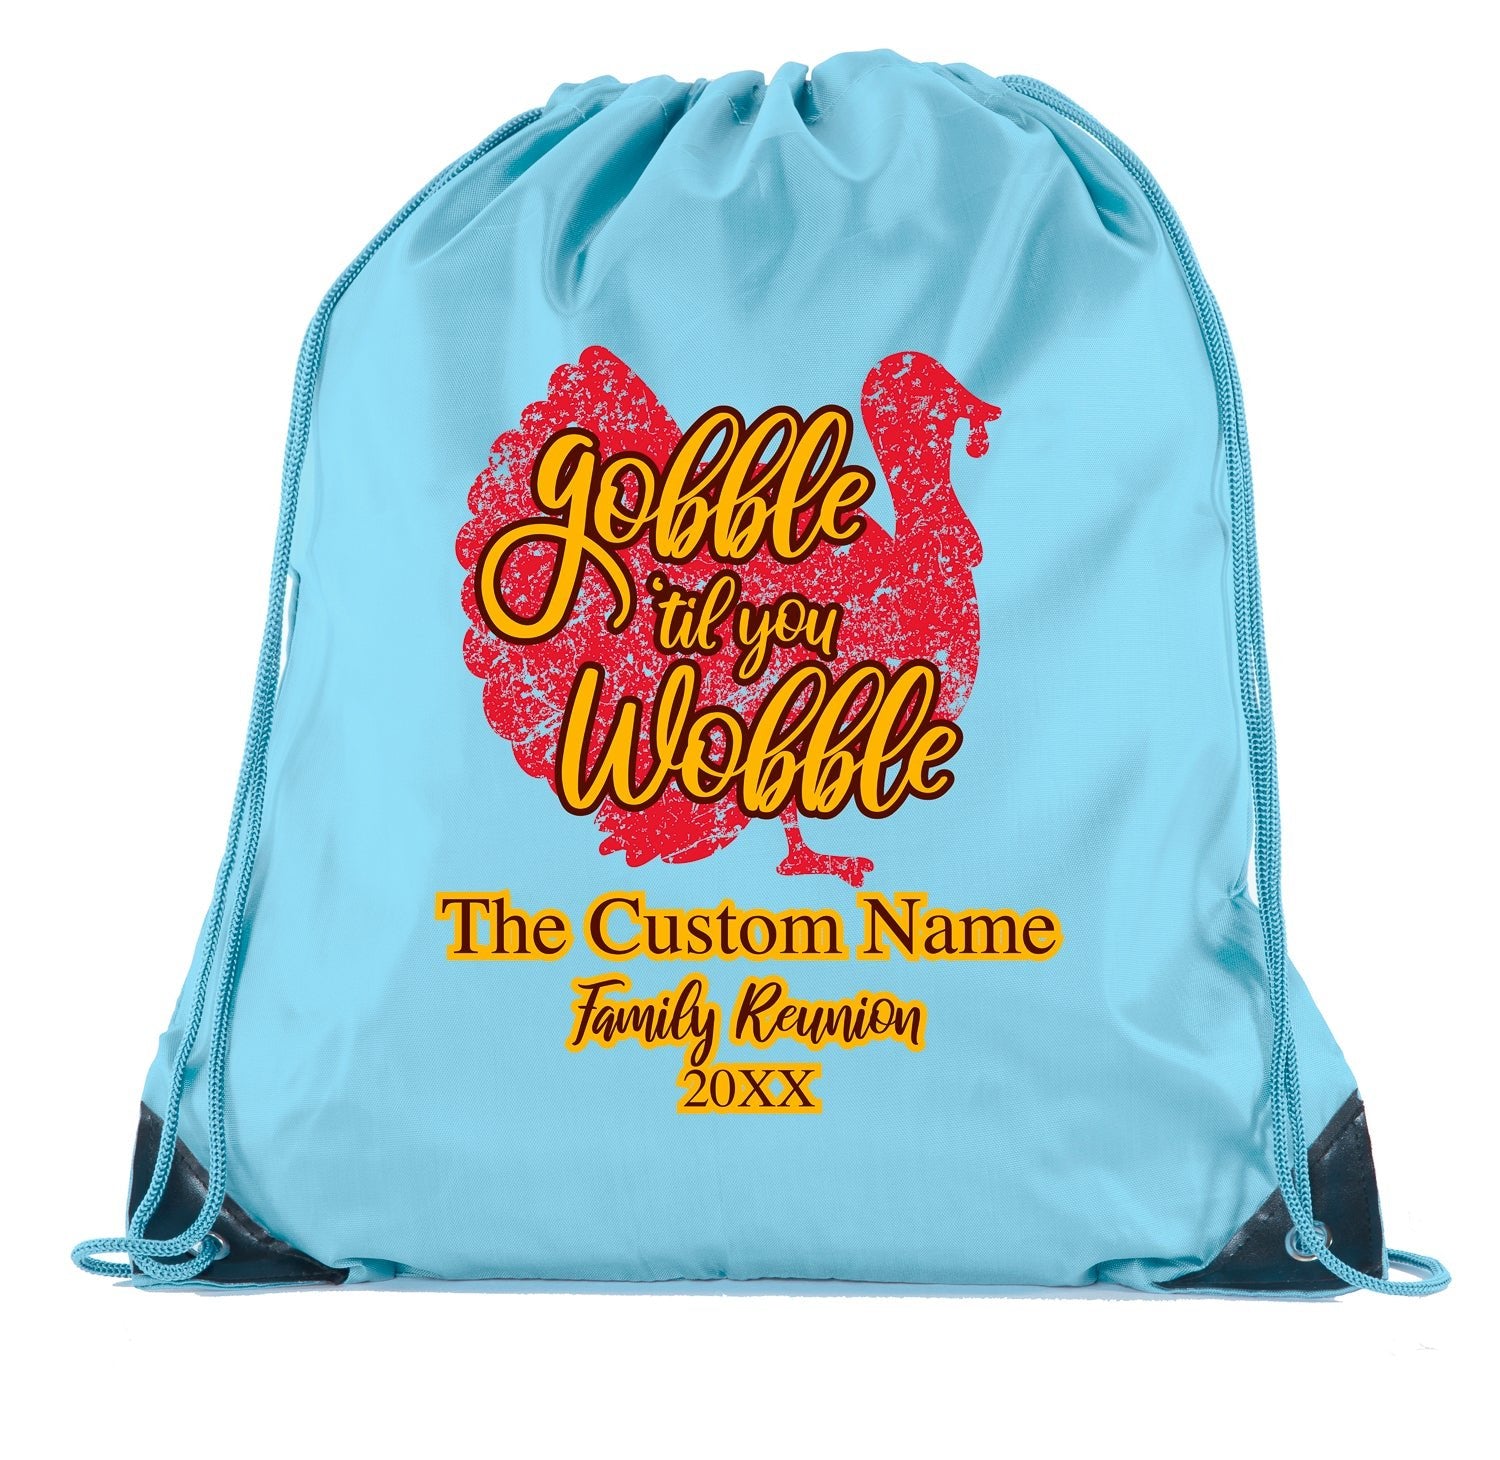 Gobble ’Til You Wobble - The Custom Name Family Reunion Polyester Drawstring Bag - Mato & Hash